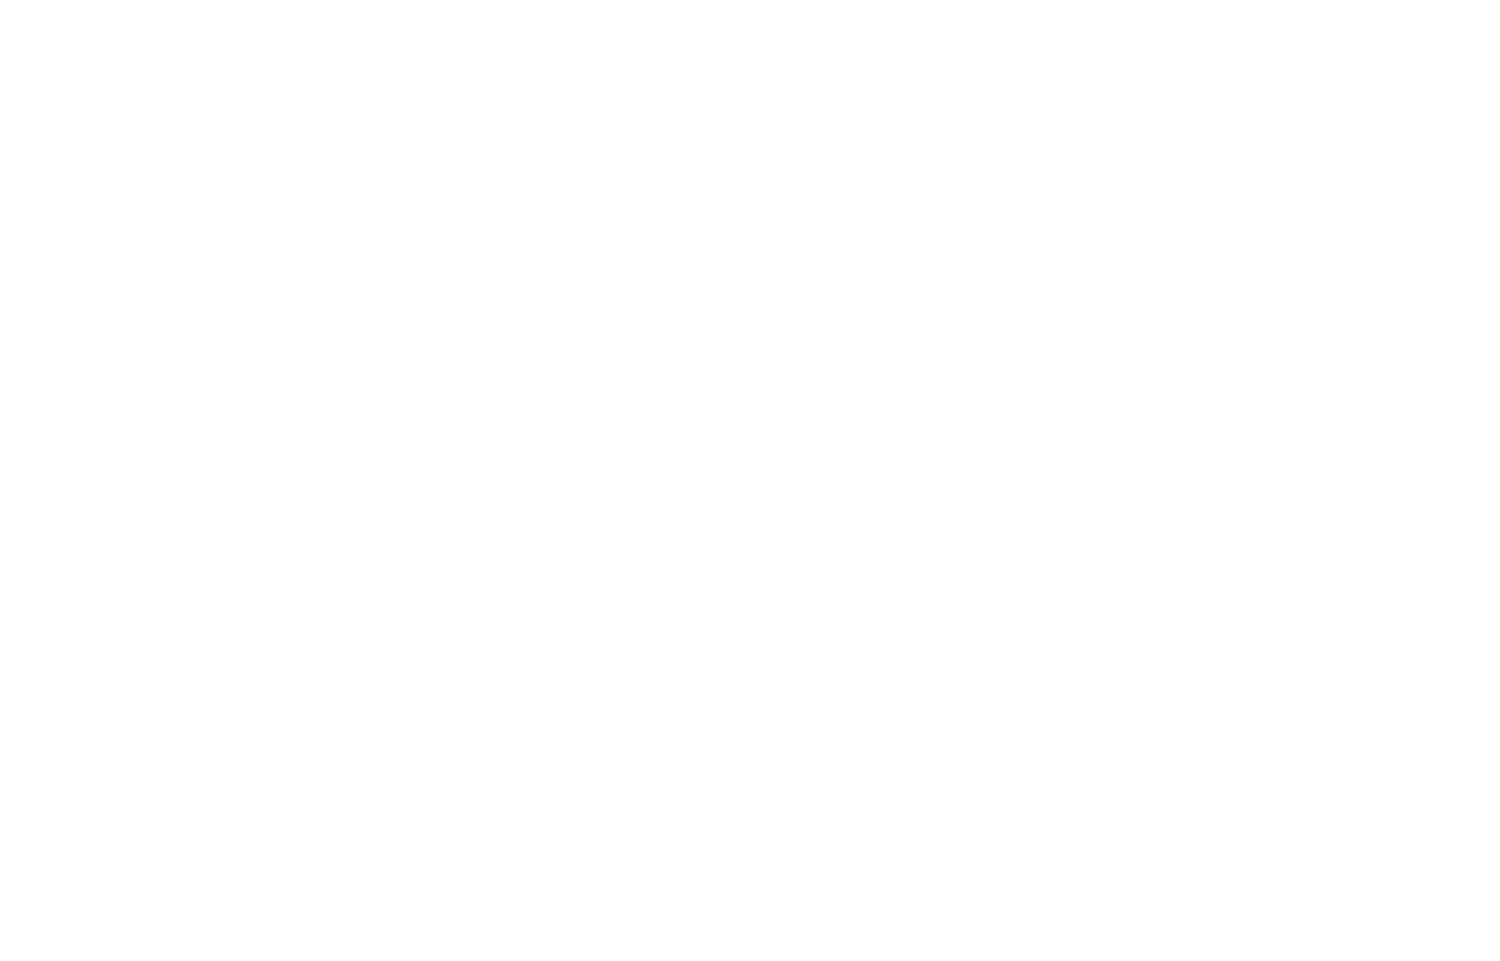 Hughes Bosca